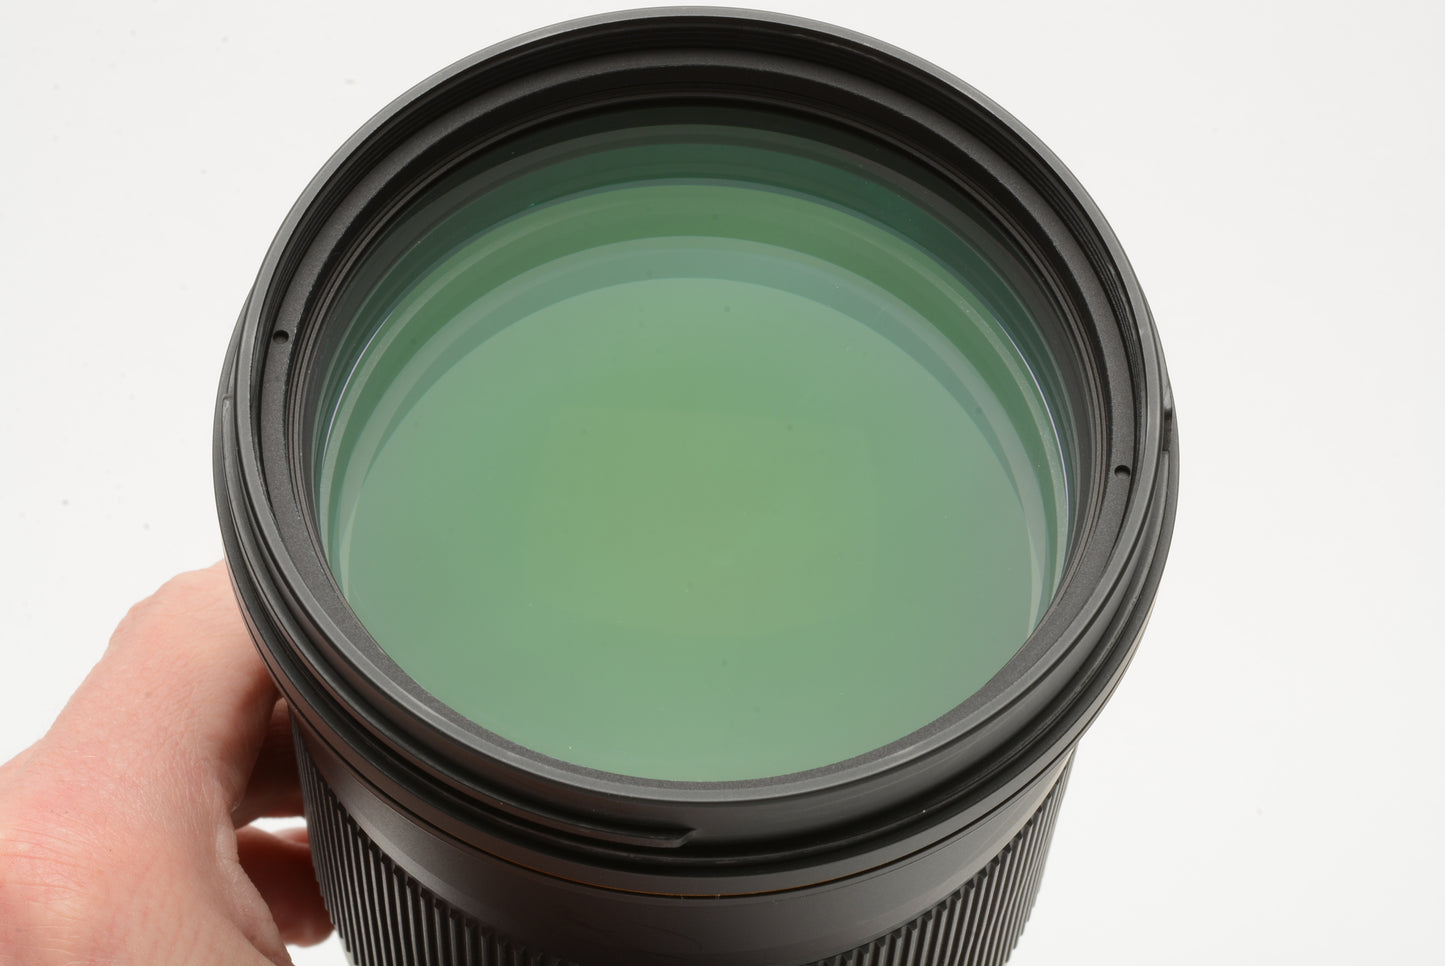 Sigma 180mm f2.8 APO EX DG OS HSM Macro lens for Nikon AF, boxed, hood+86mm UV